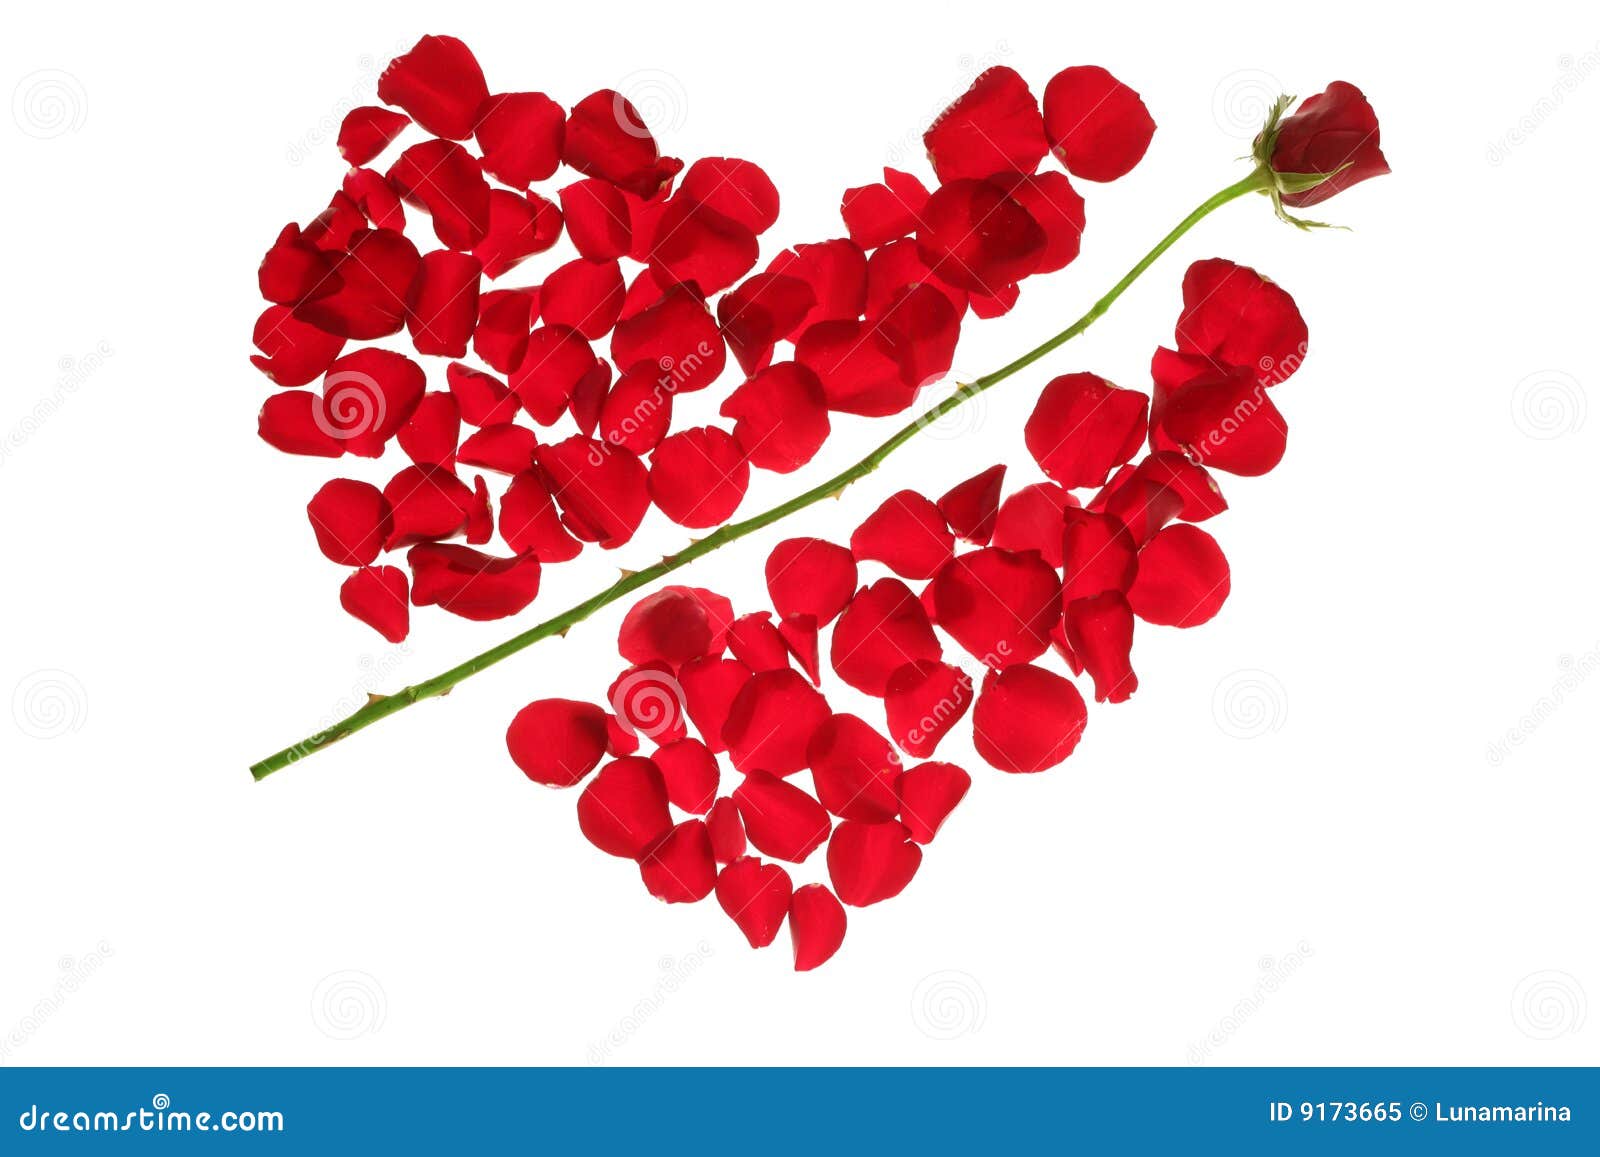 cupid arrow in a red rose petals heart 